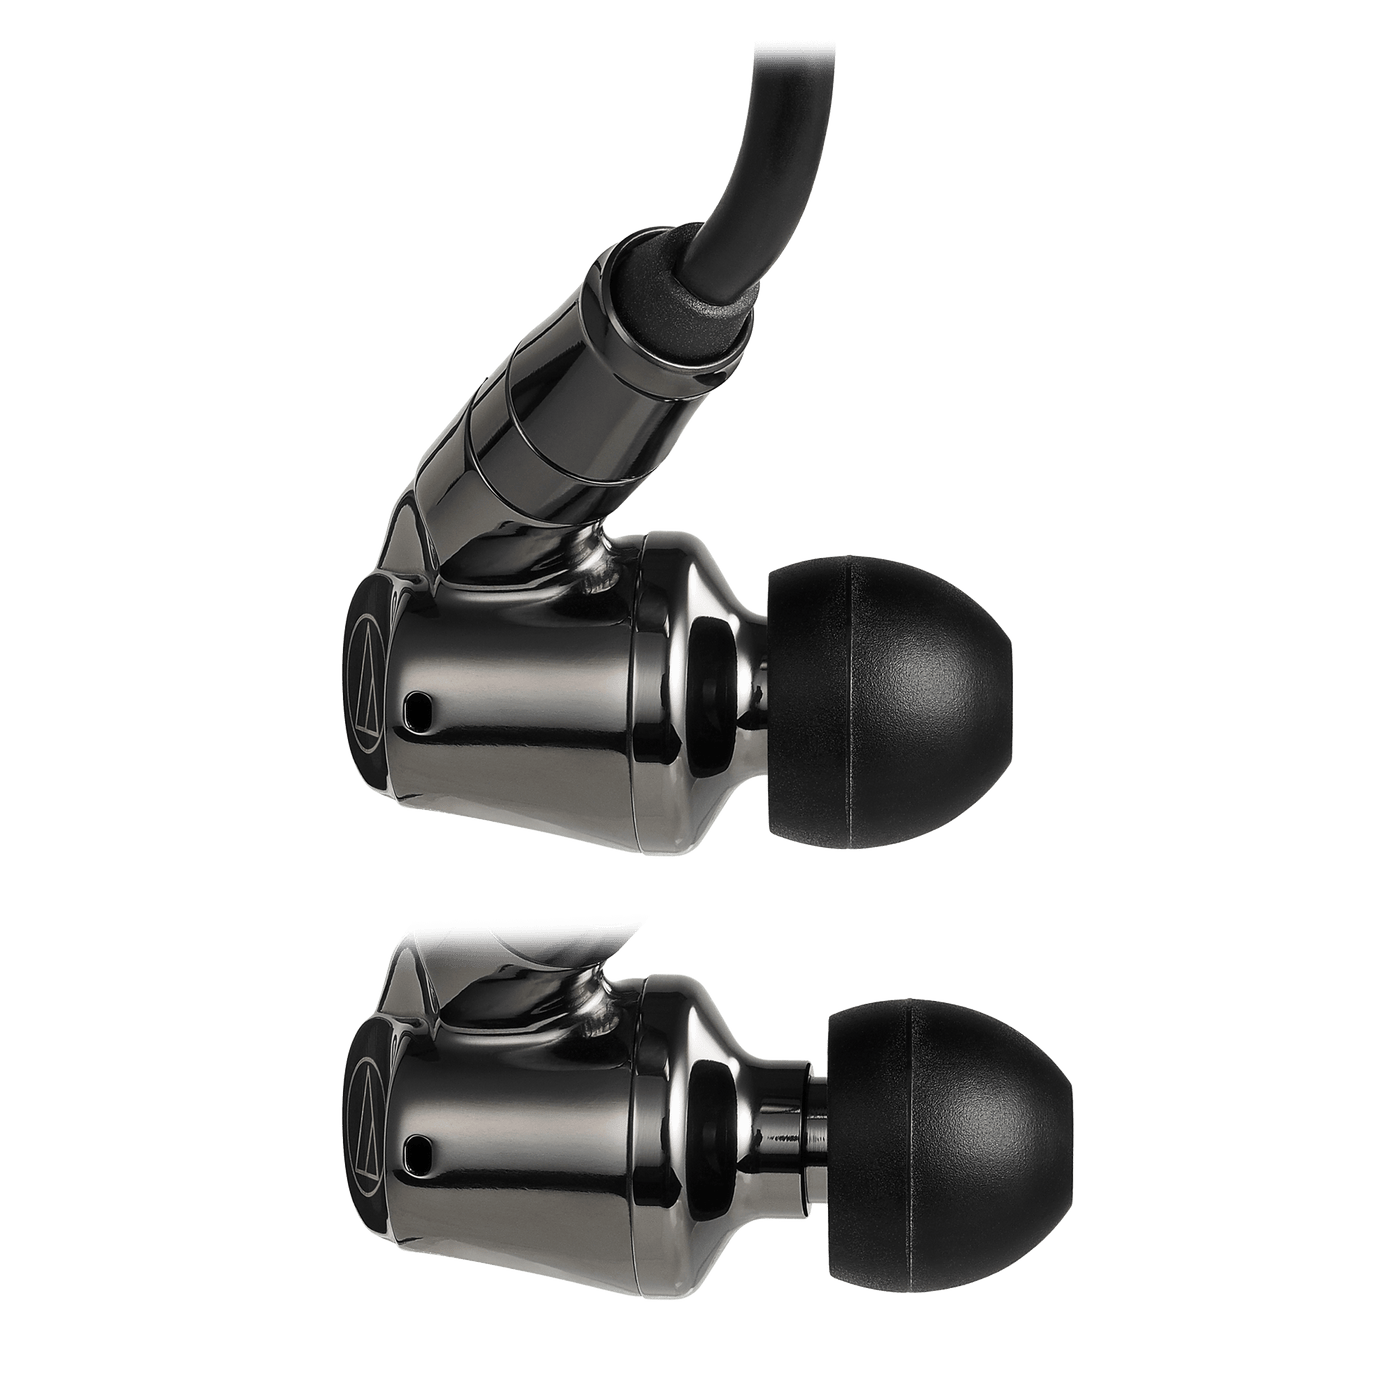 Audio-Technica ATH-IEX1 In-Ear Hybrid Multidriver Headphones